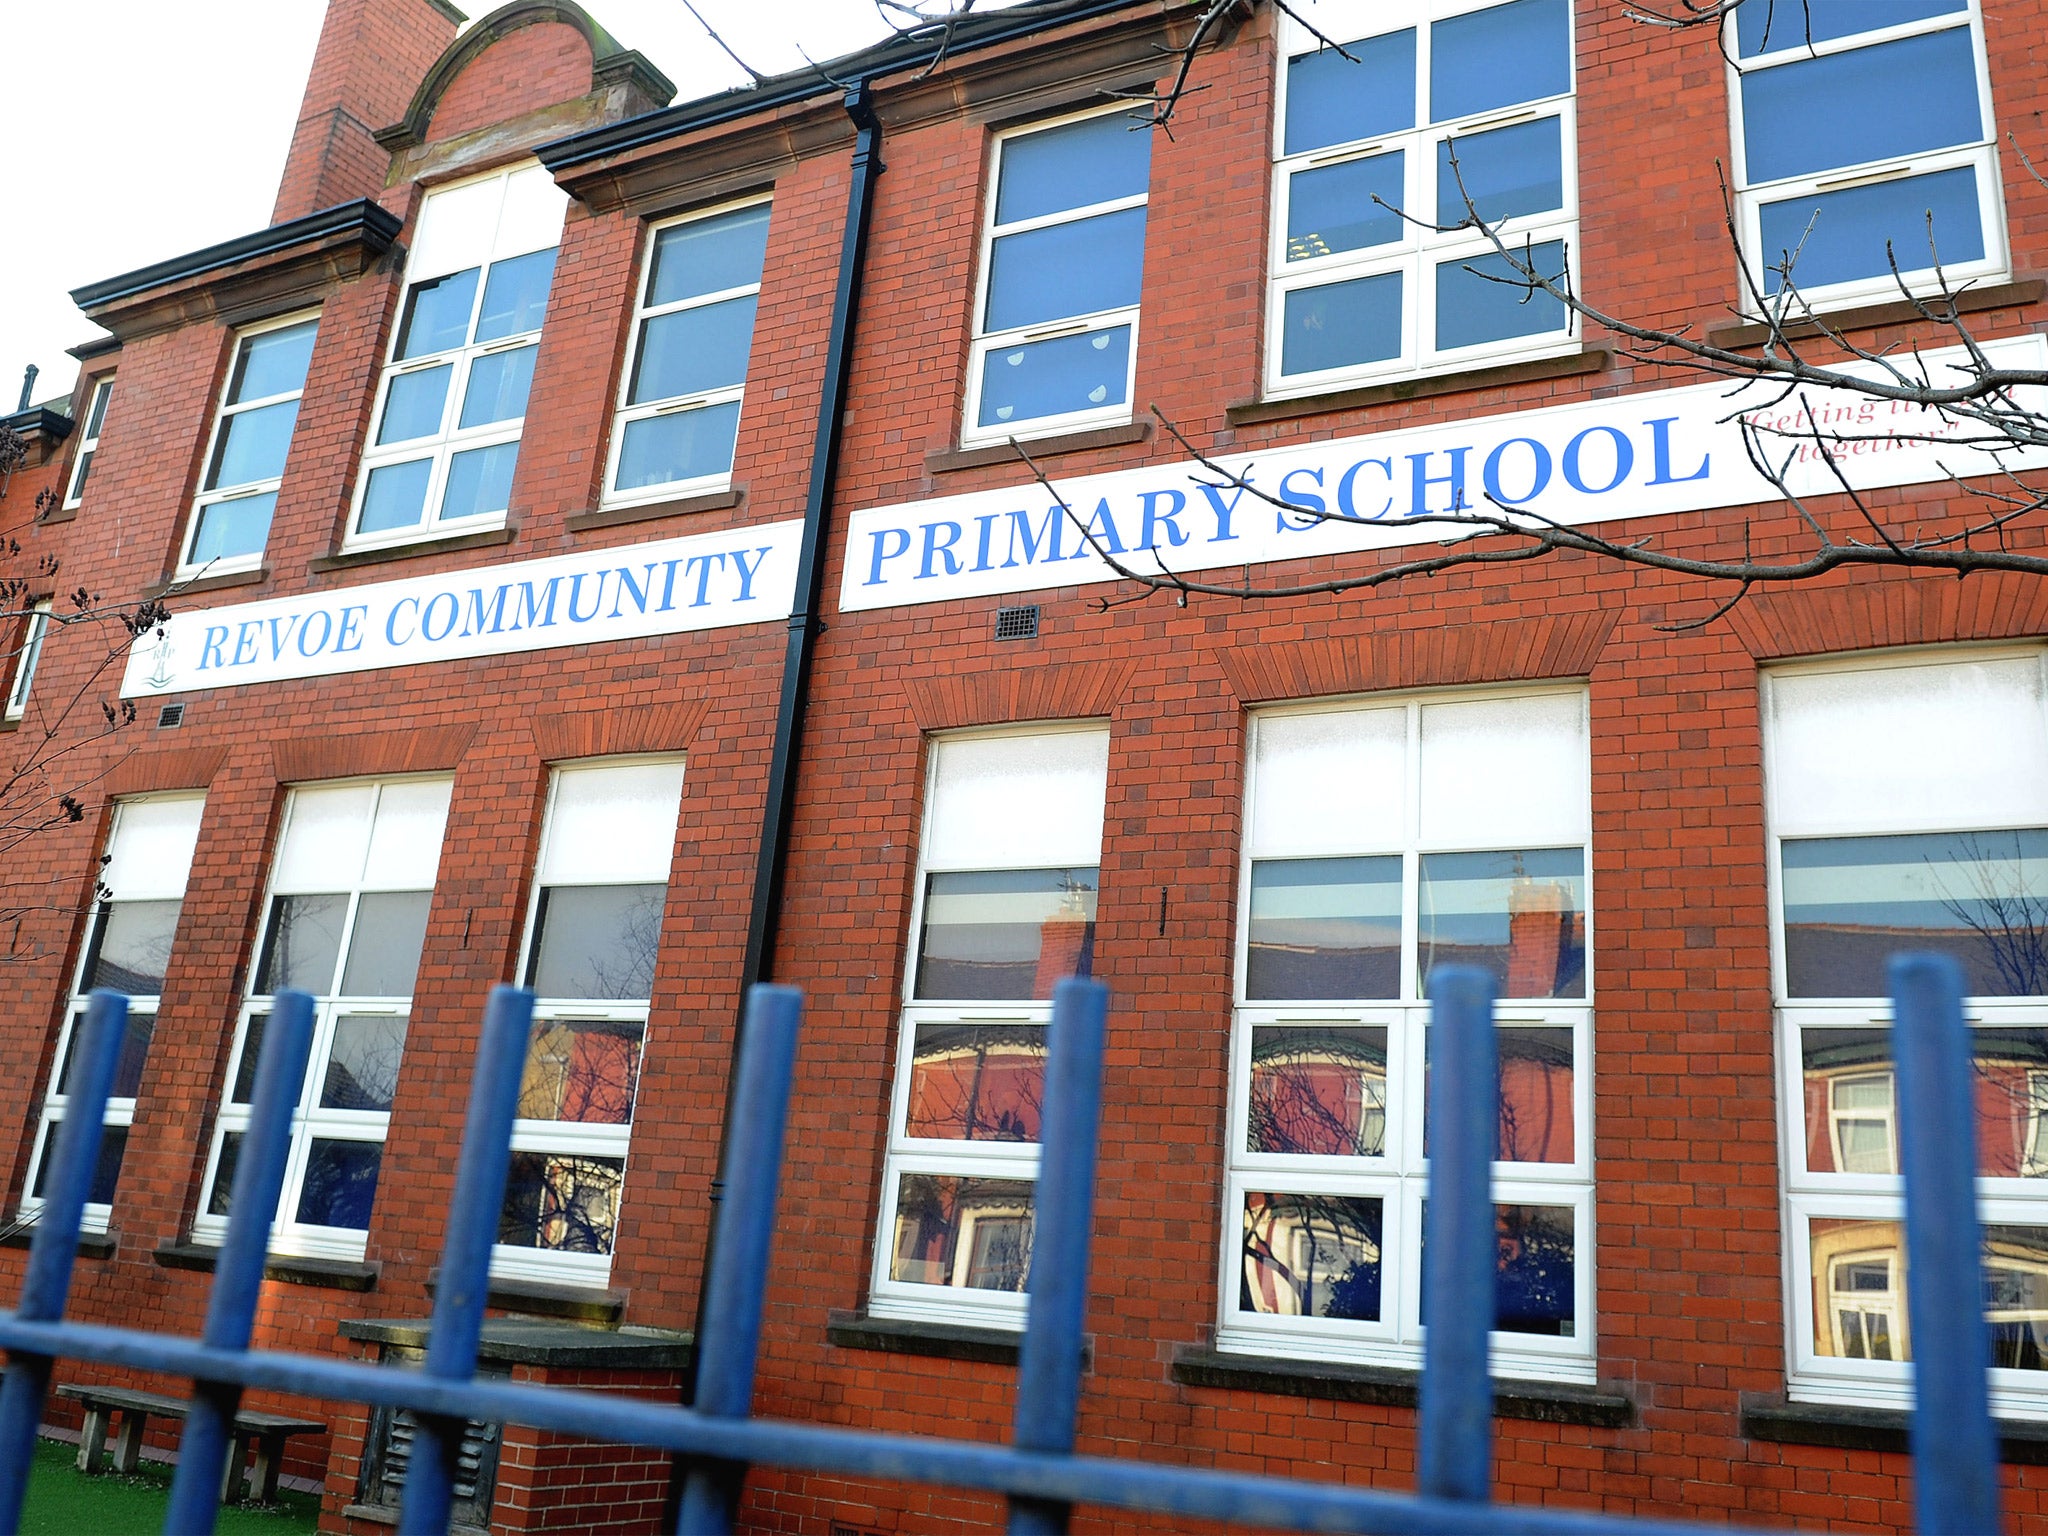 Revoe Primary School in Blackpool, Lancashire